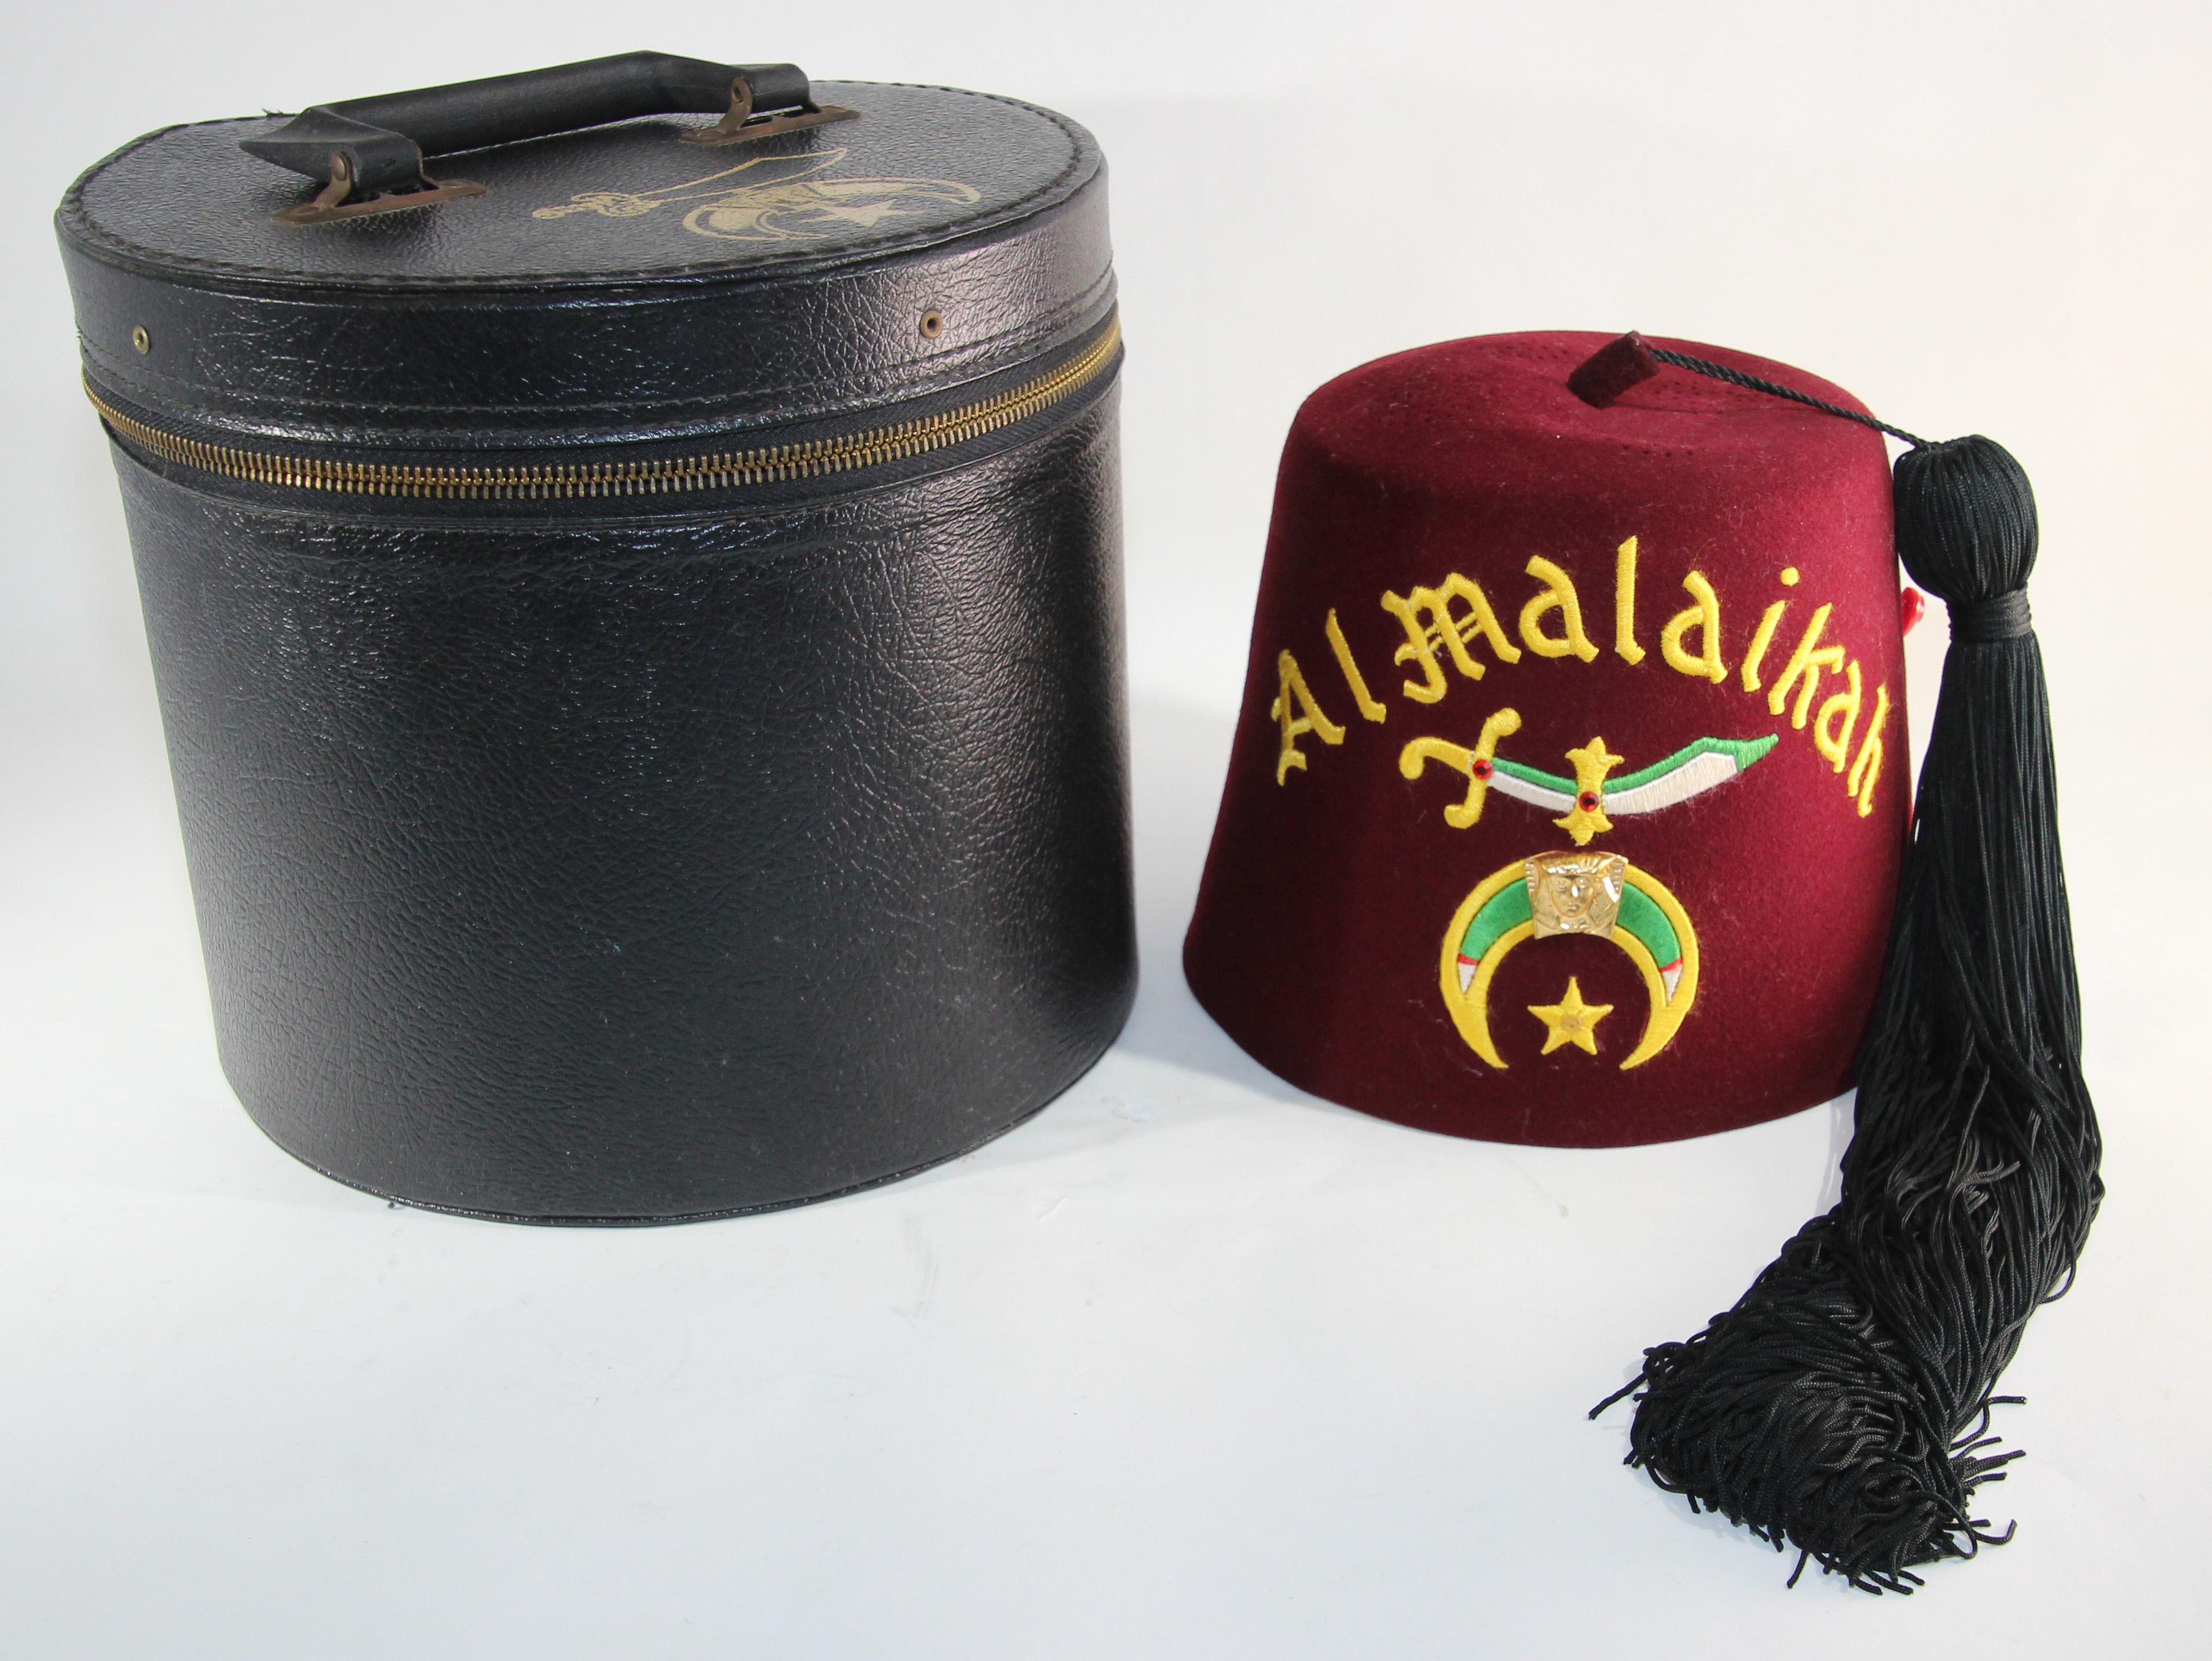 AL Malaikah vintage Masonic Shriner iconic burgundy wool Fez hat with original box. Al Malaikah, legion of Honor vintage fez hat from the Los Angeles Al Malaikah Shriner masonic lodge. This vintage Al Malaikah Shriner's fez in burgundy felt wool